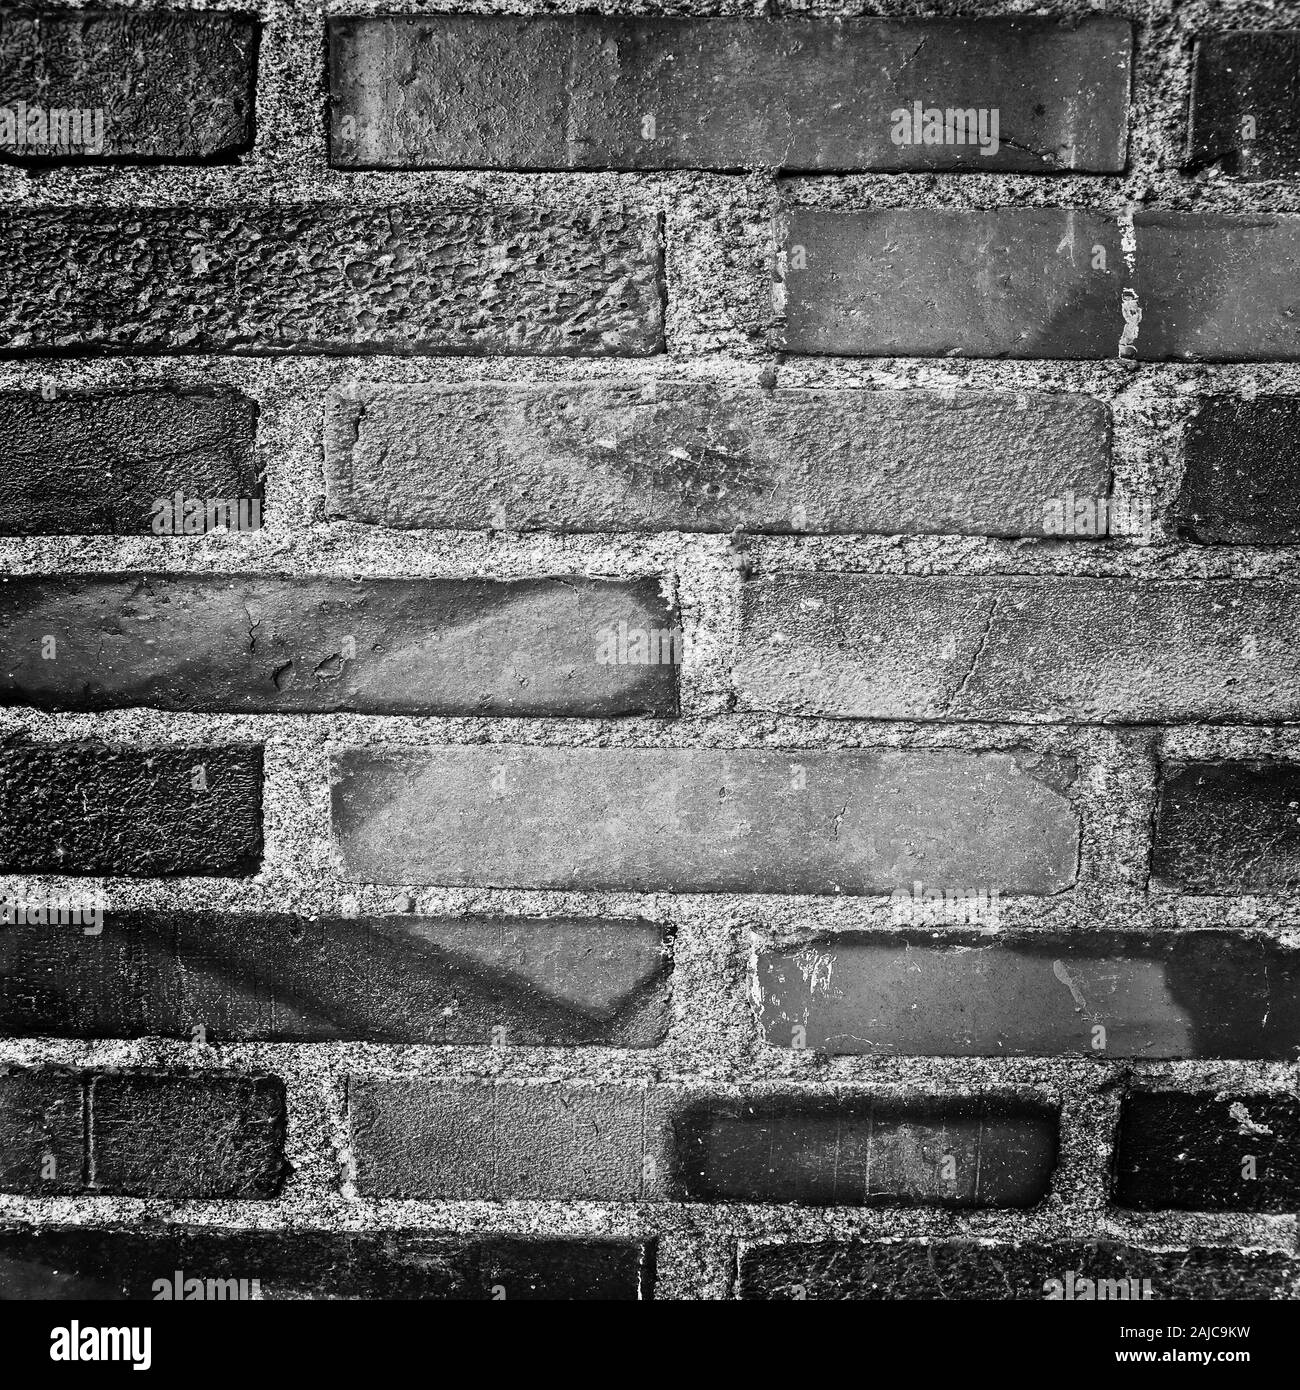 Patterned wall backgrounds Imágenes de stock en blanco y negro - Alamy